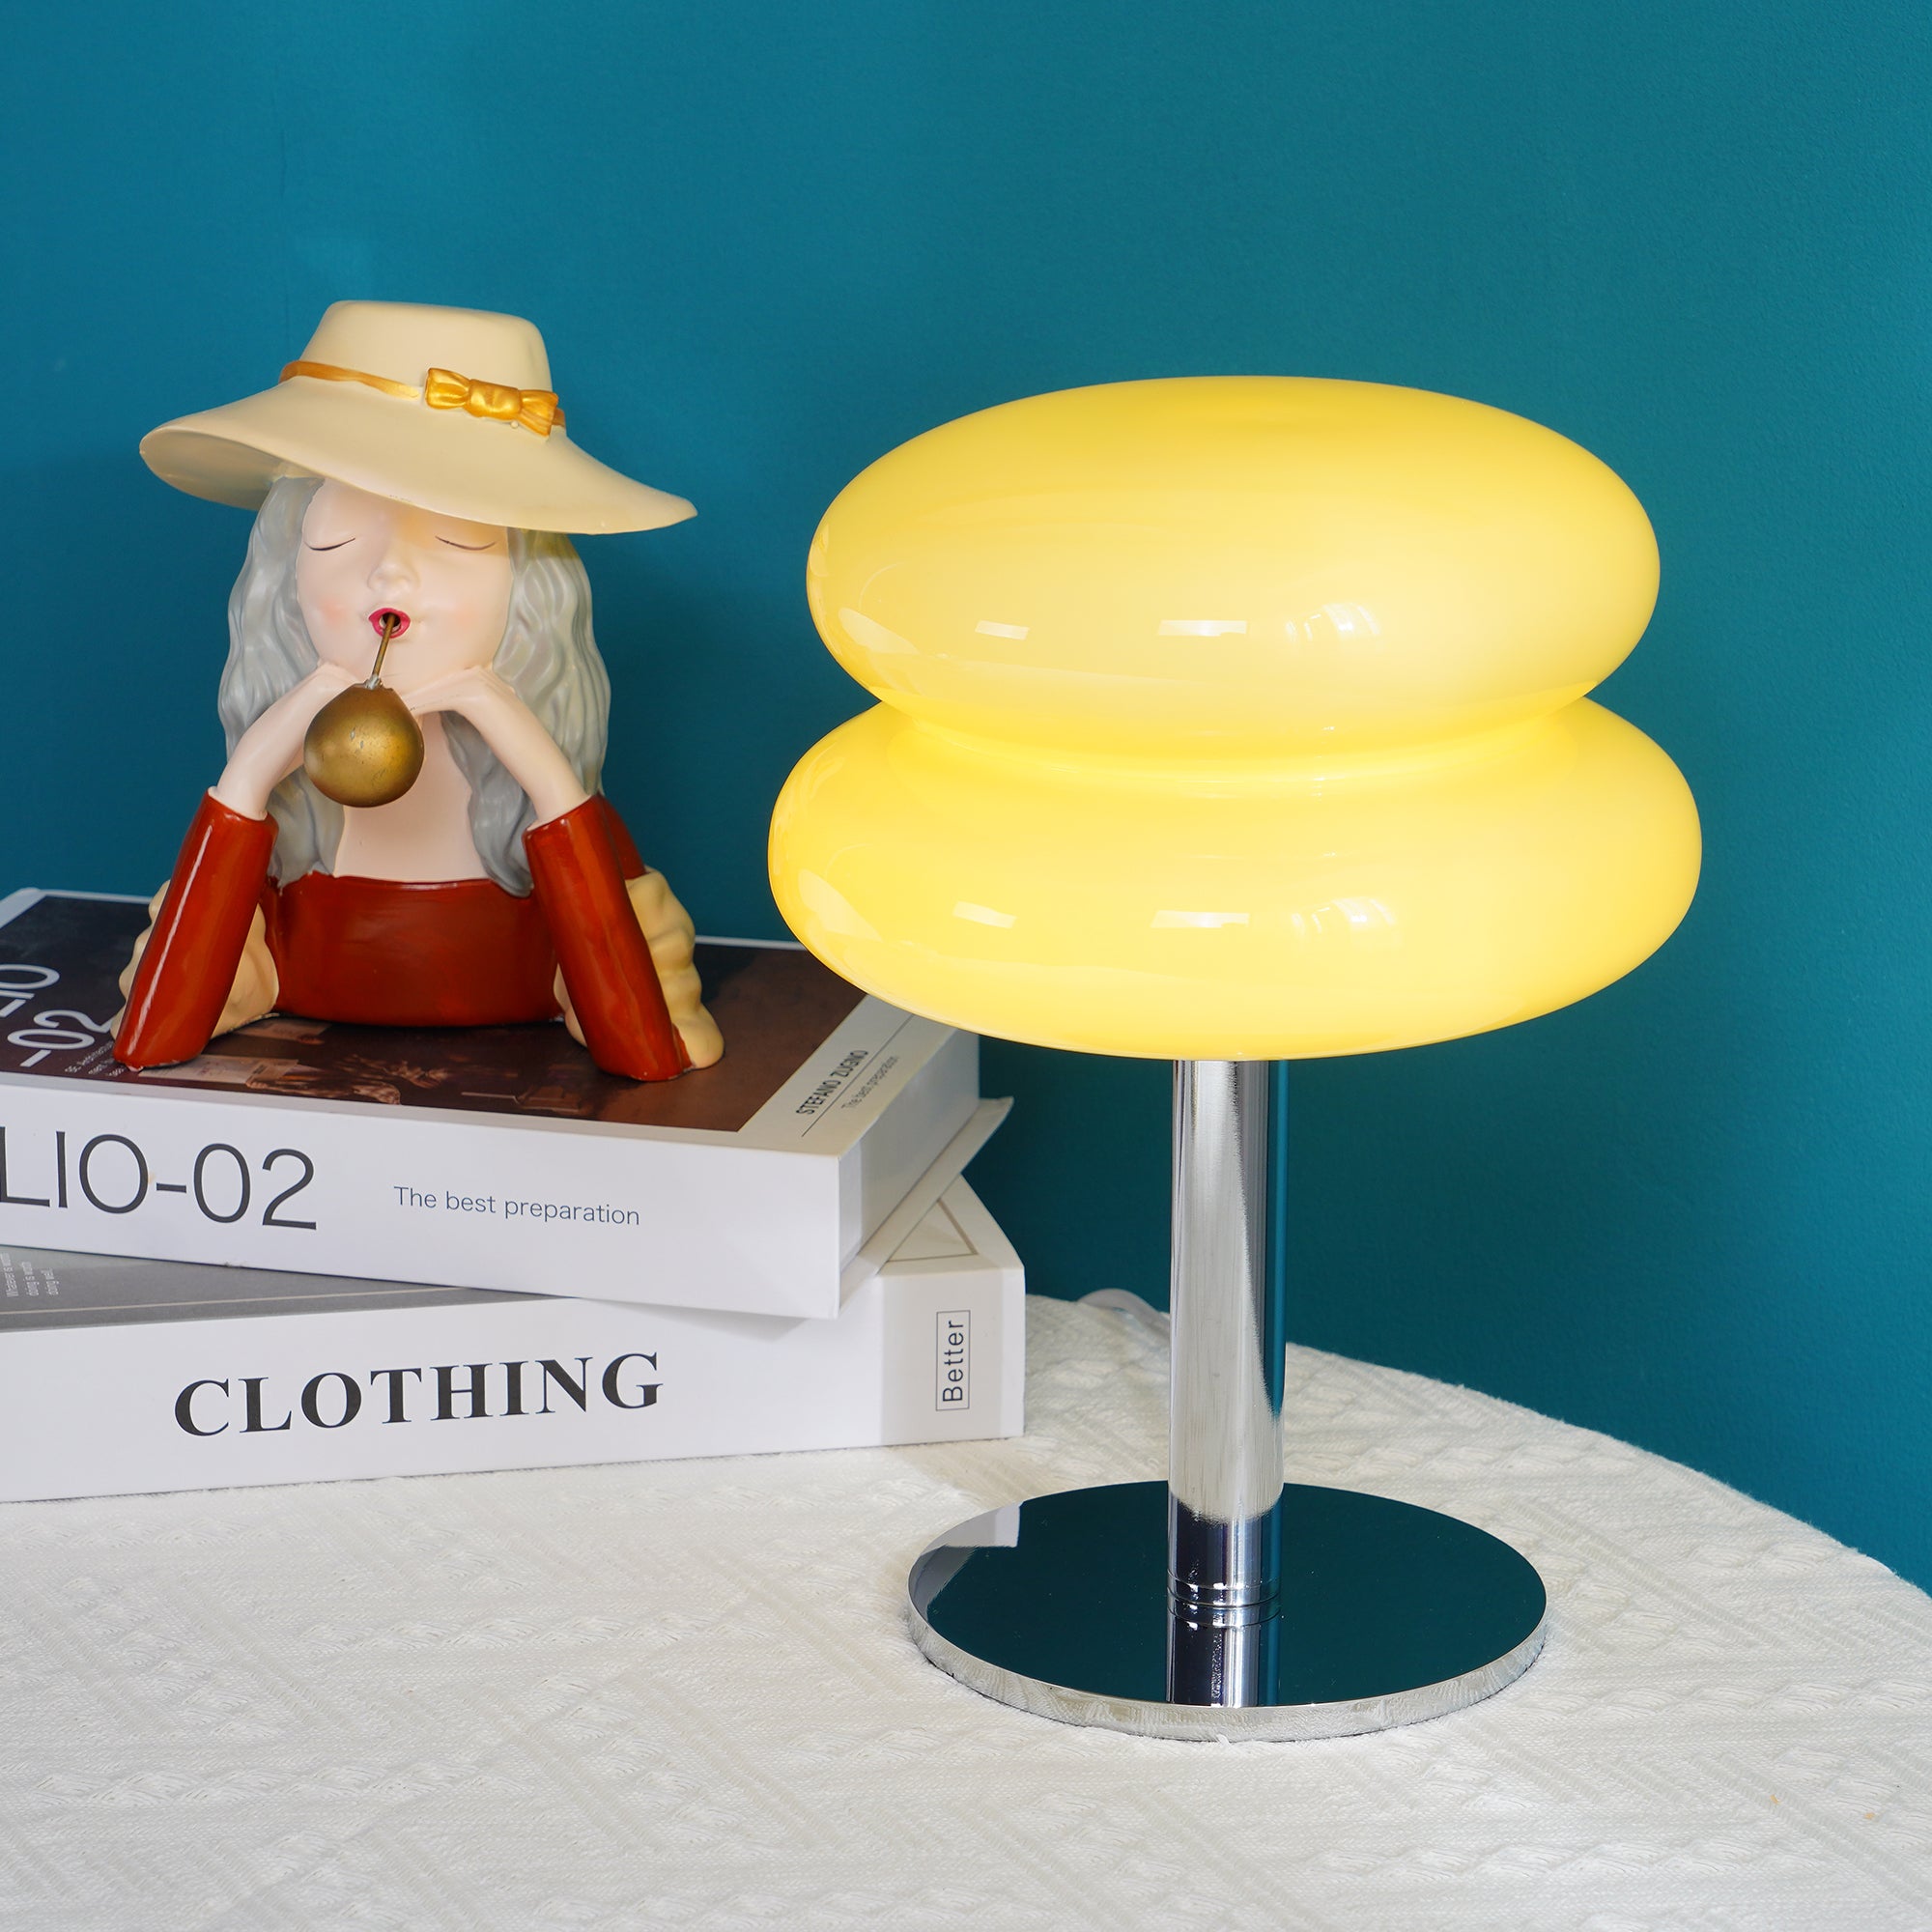 Macaron Glass Table Lamp